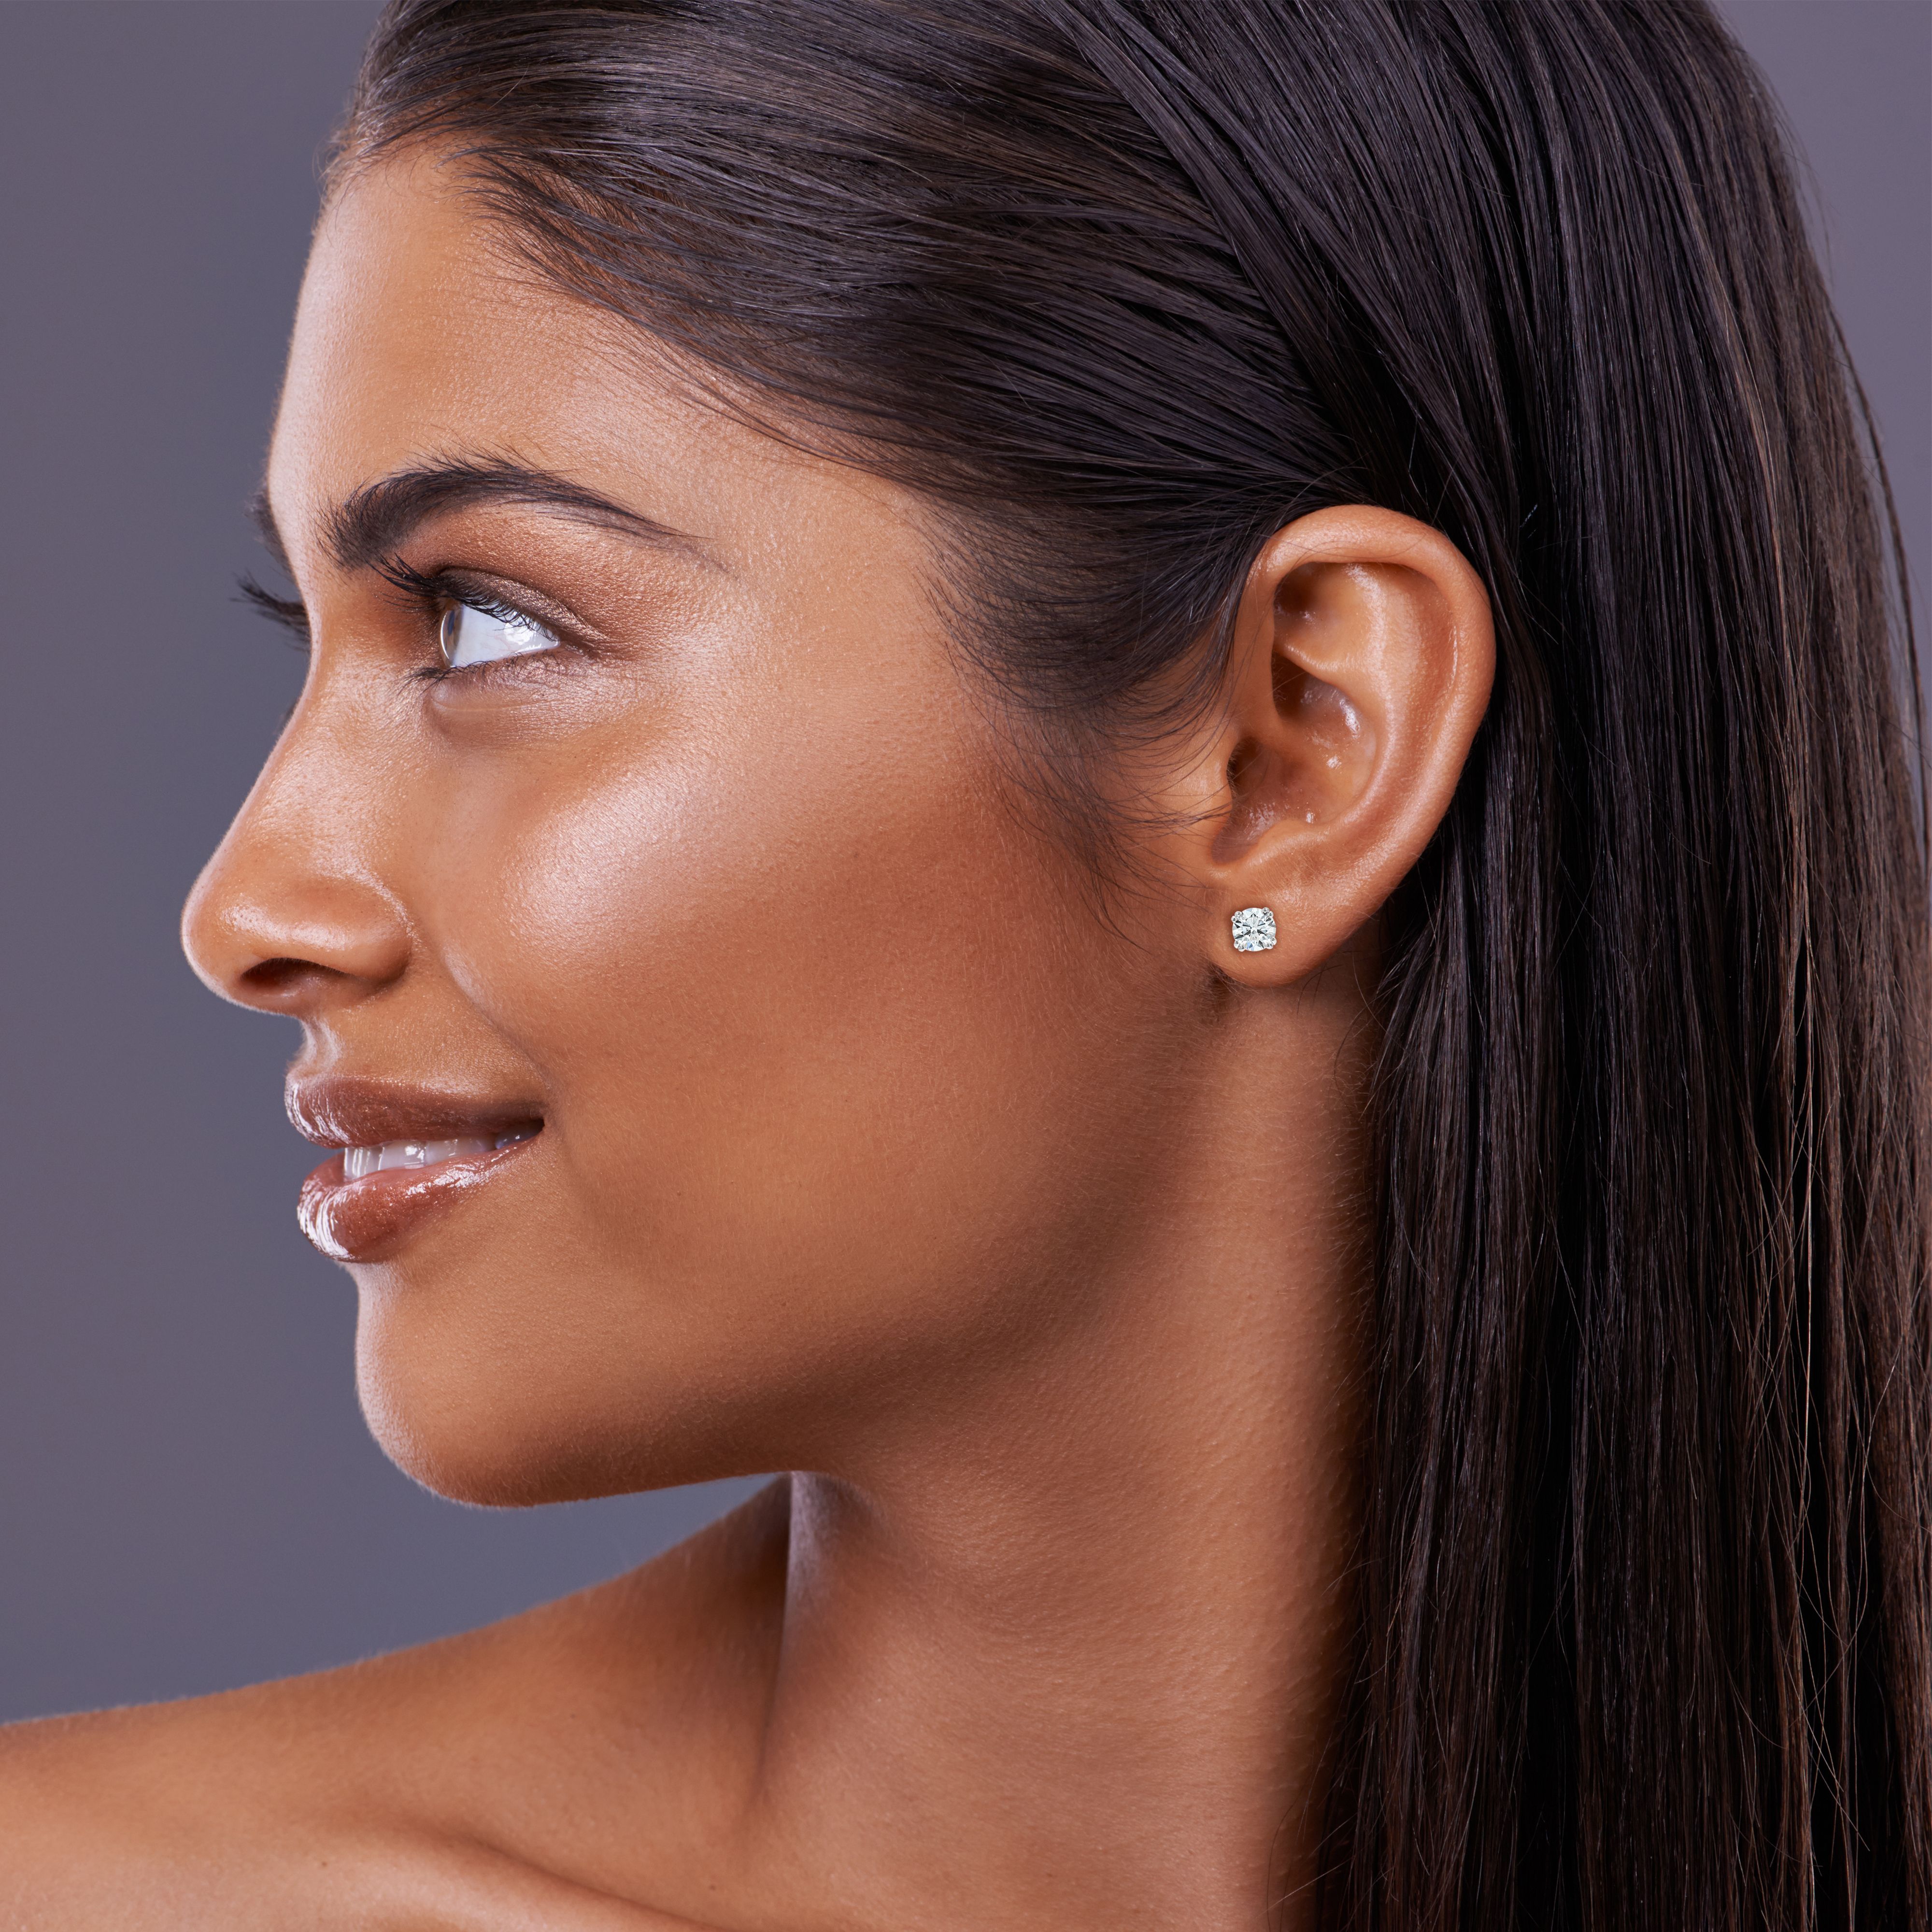 Tillie - Natural Diamond Stud Earrings